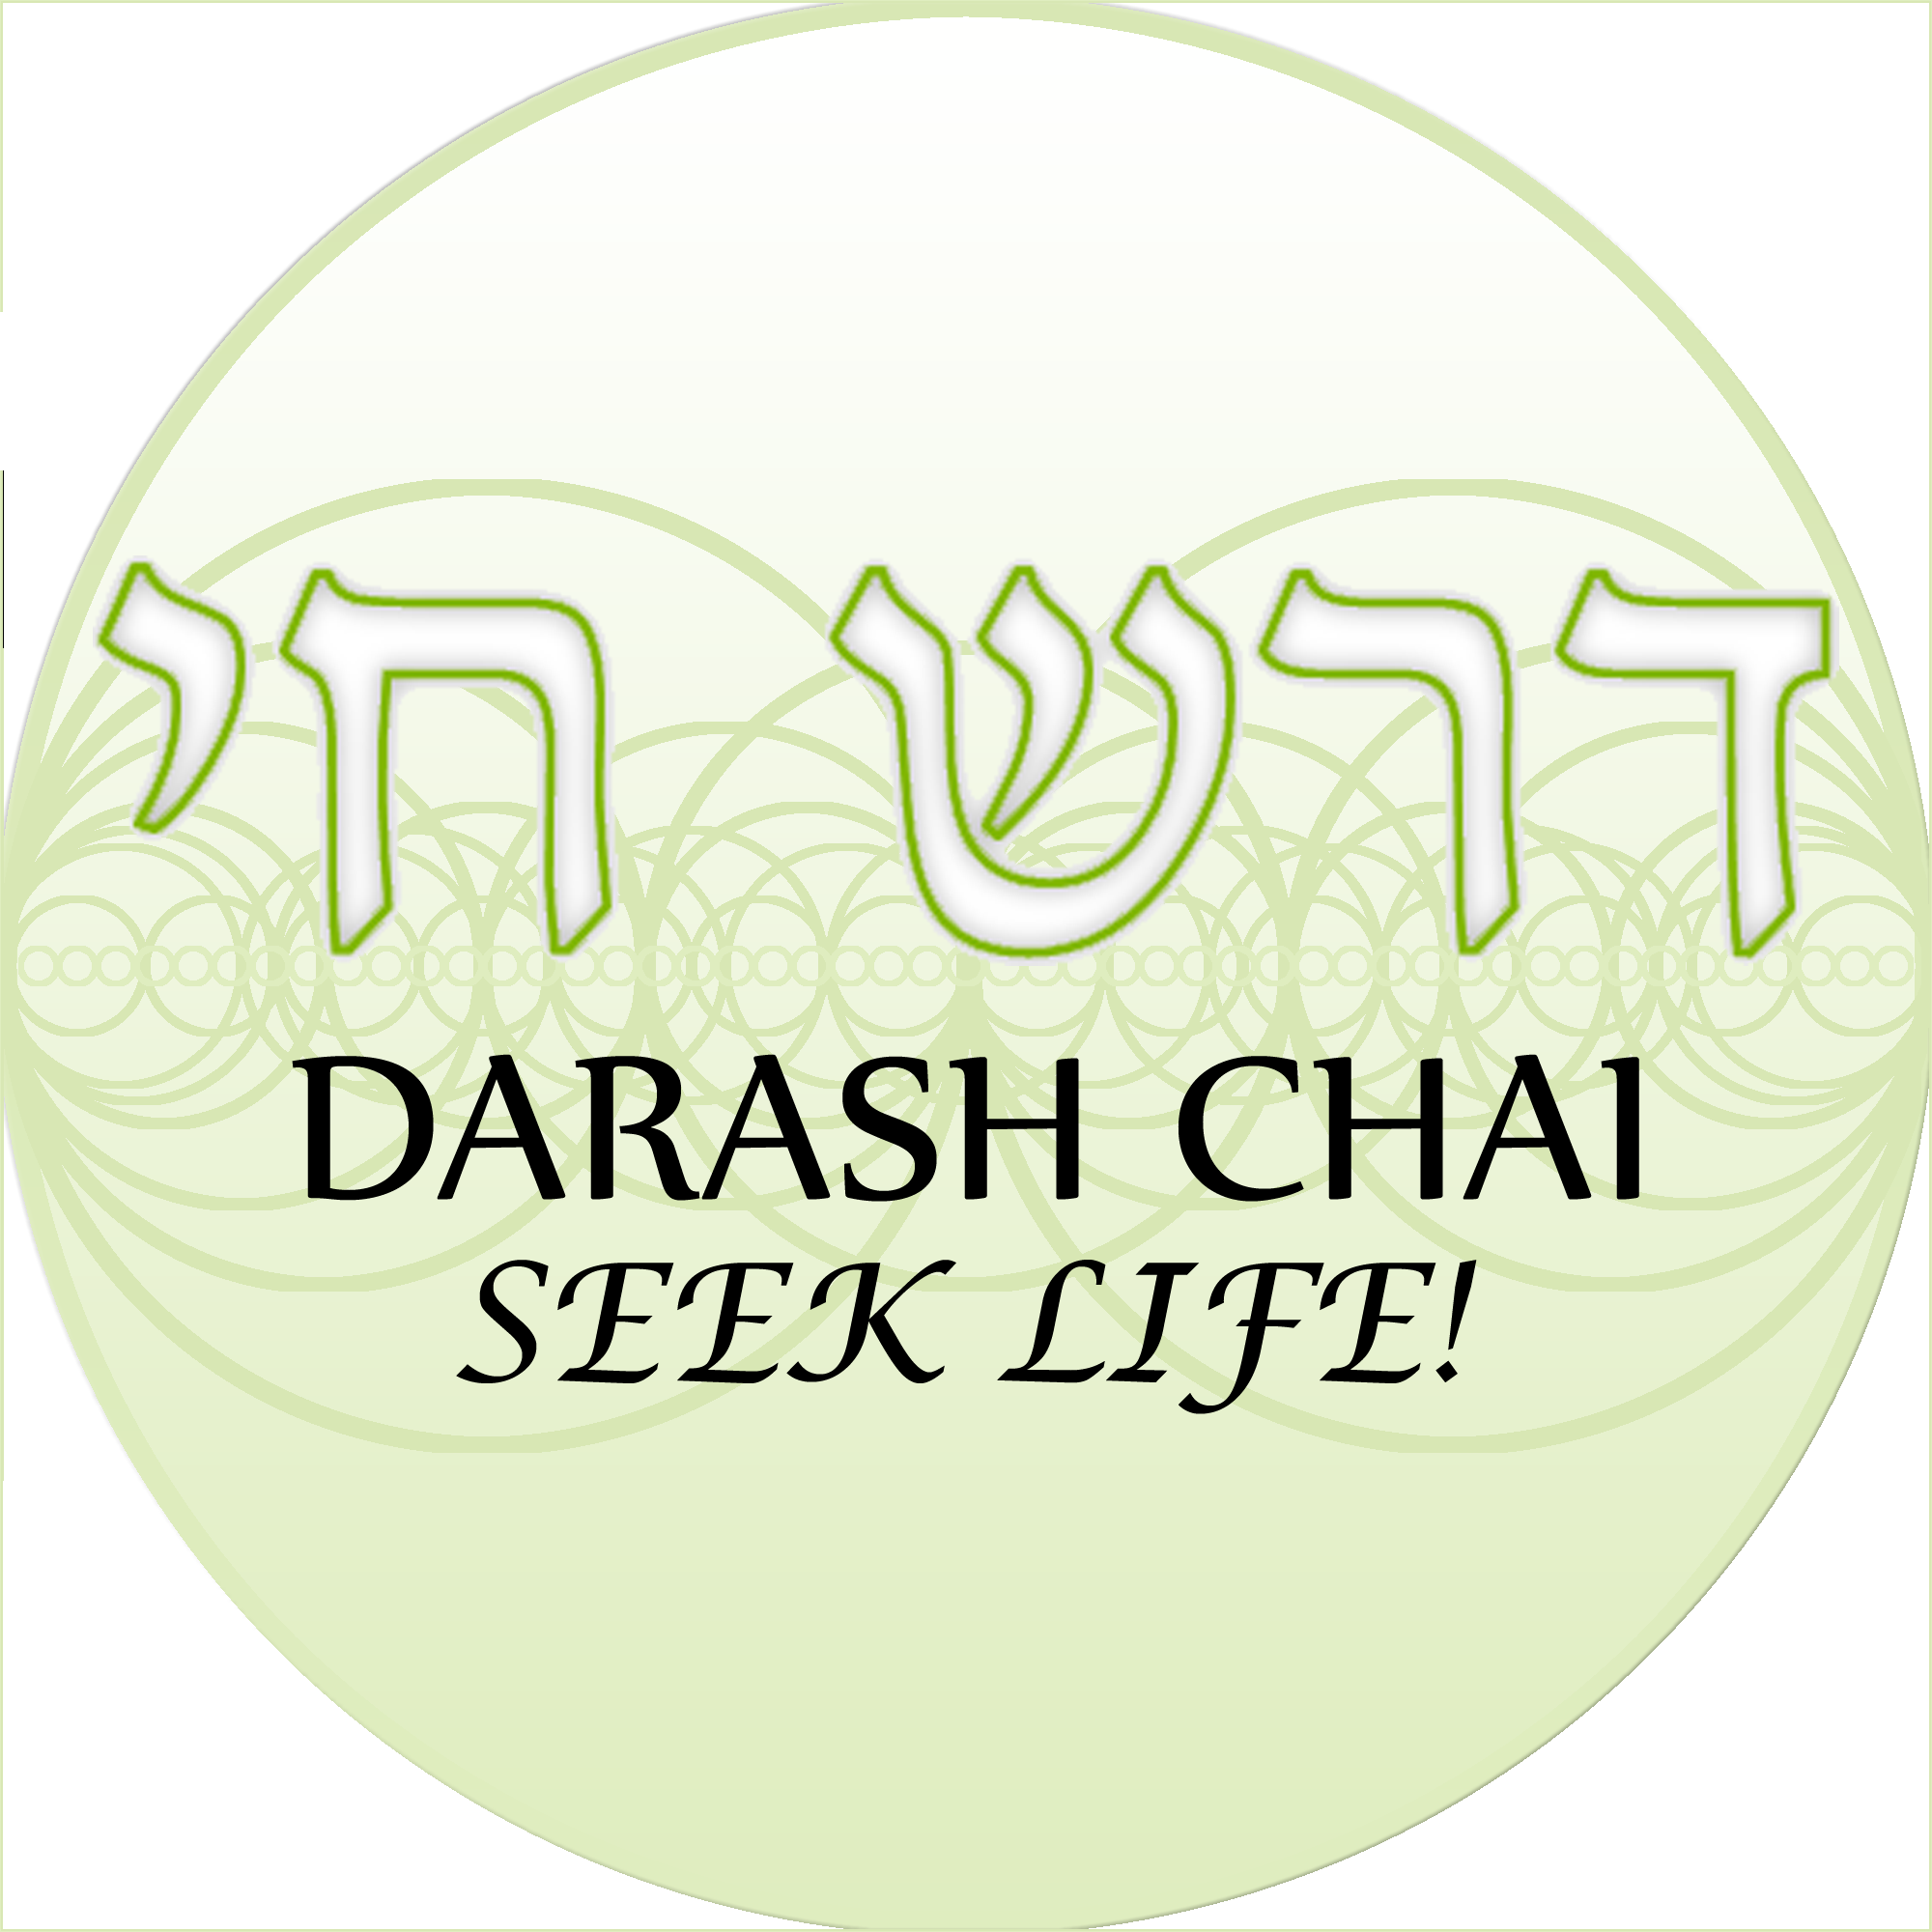 The Darash Chai Experiment